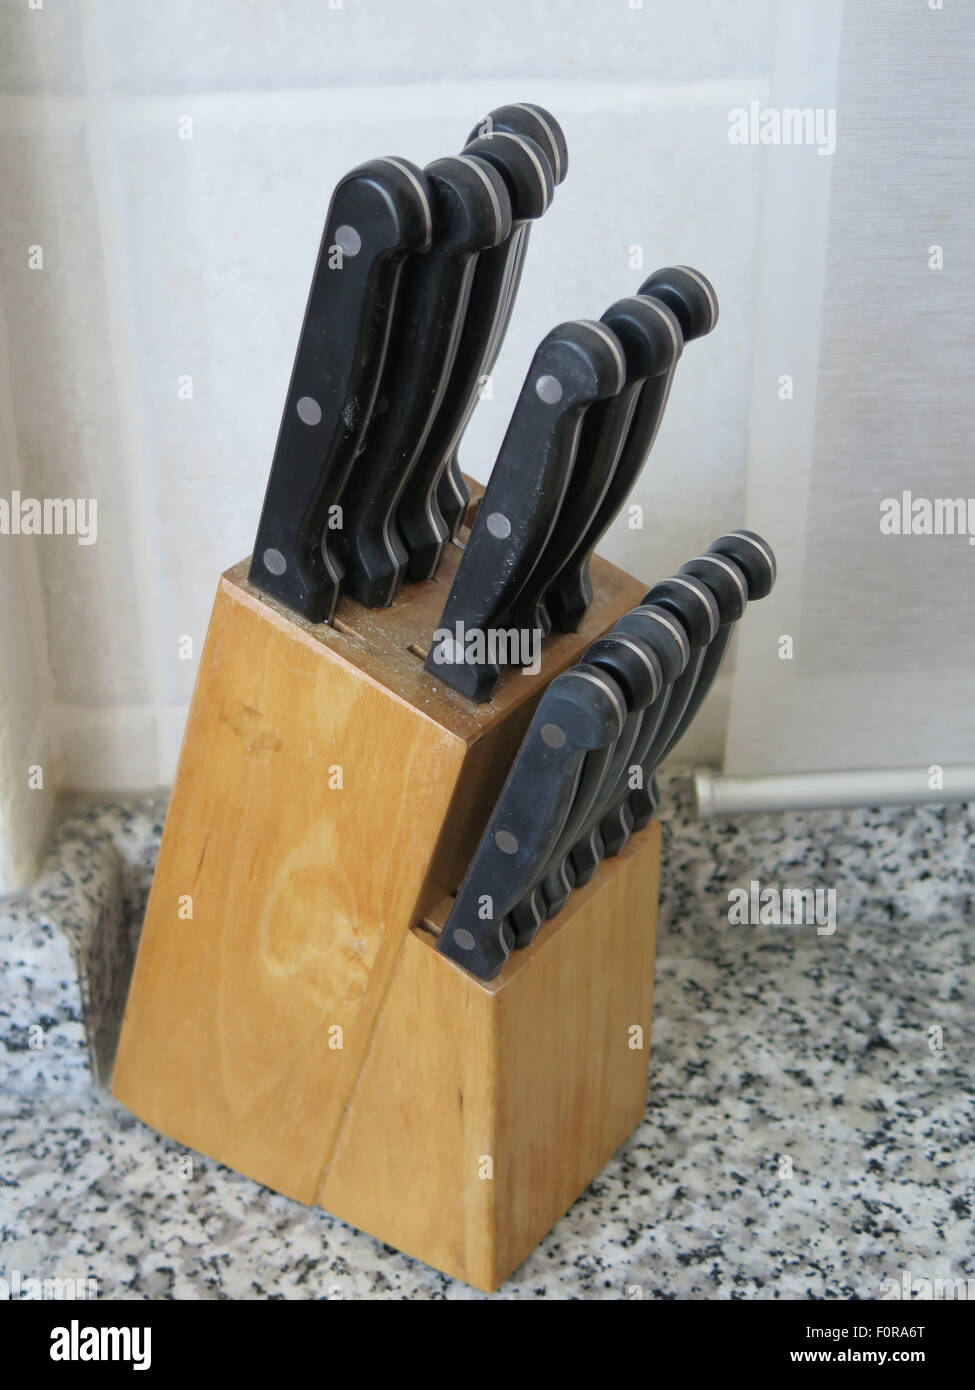 https://c8.alamy.com/comp/F0RA6T/knife-block-on-granite-kitchen-work-top-F0RA6T.jpg